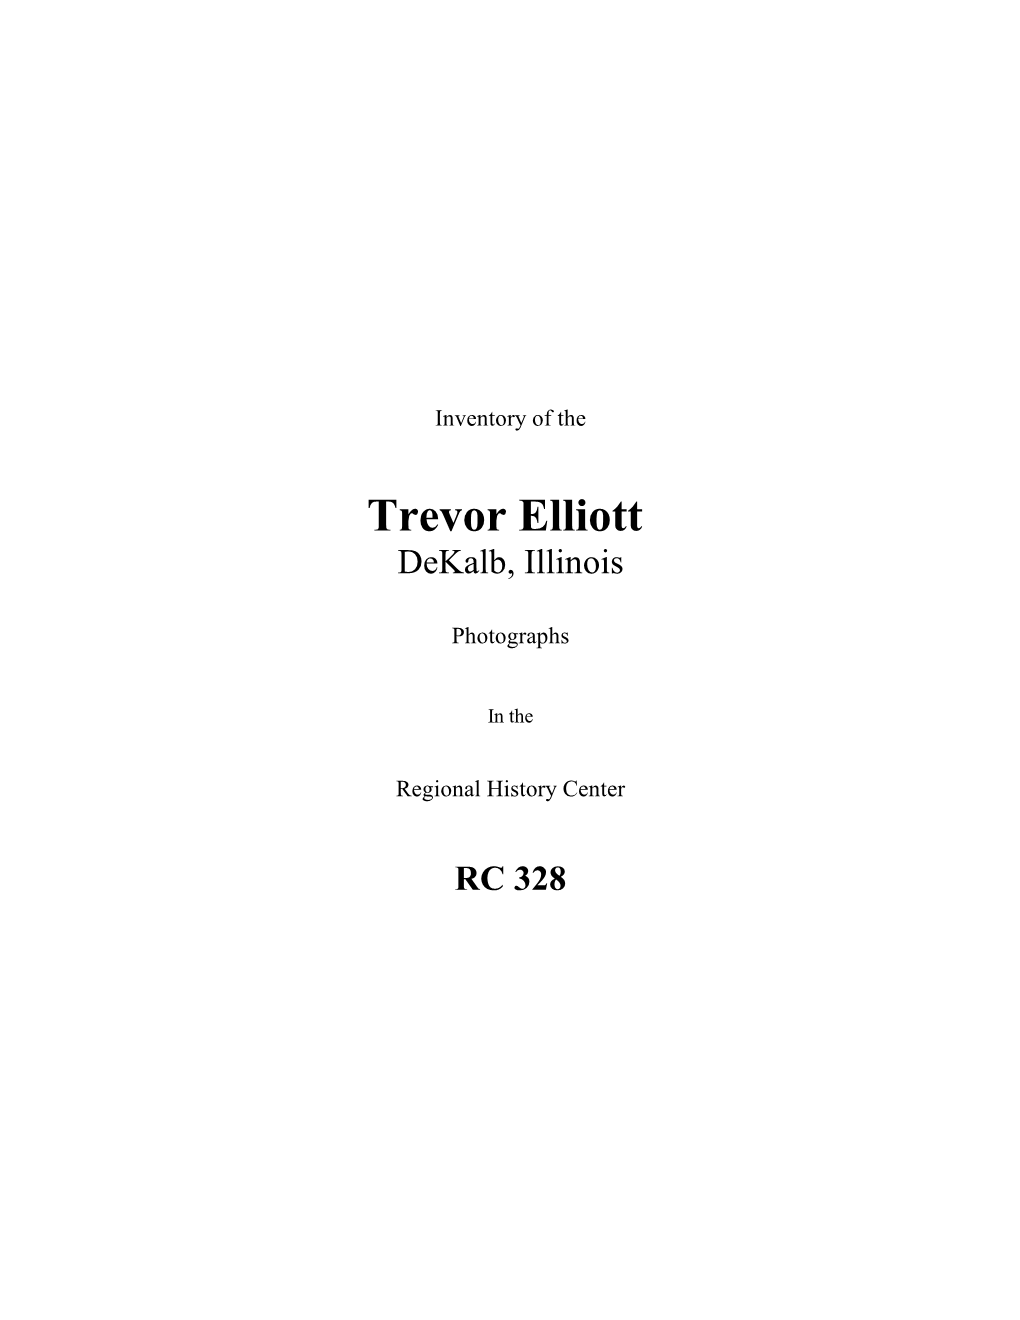 Trevor Elliott Dekalb, Illinois